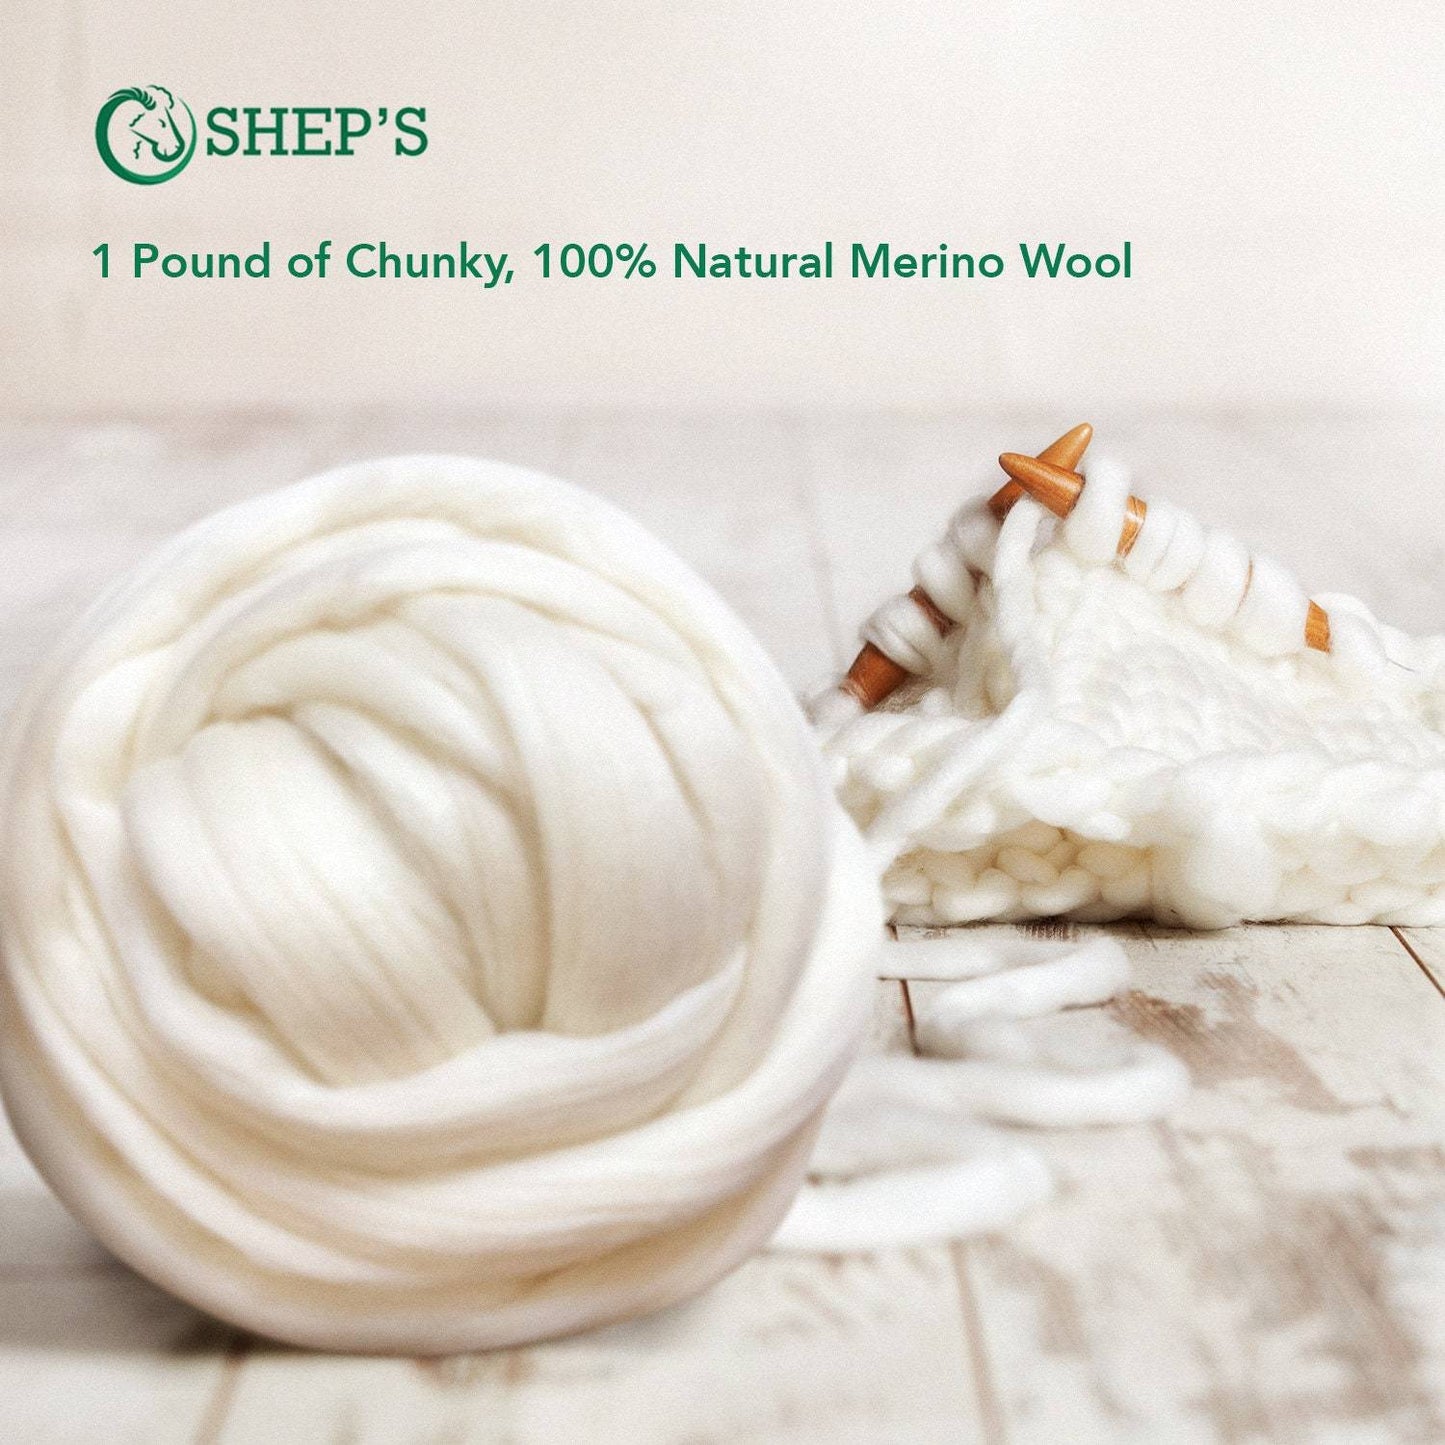 Sheps Merino Wool Chunky Yarn